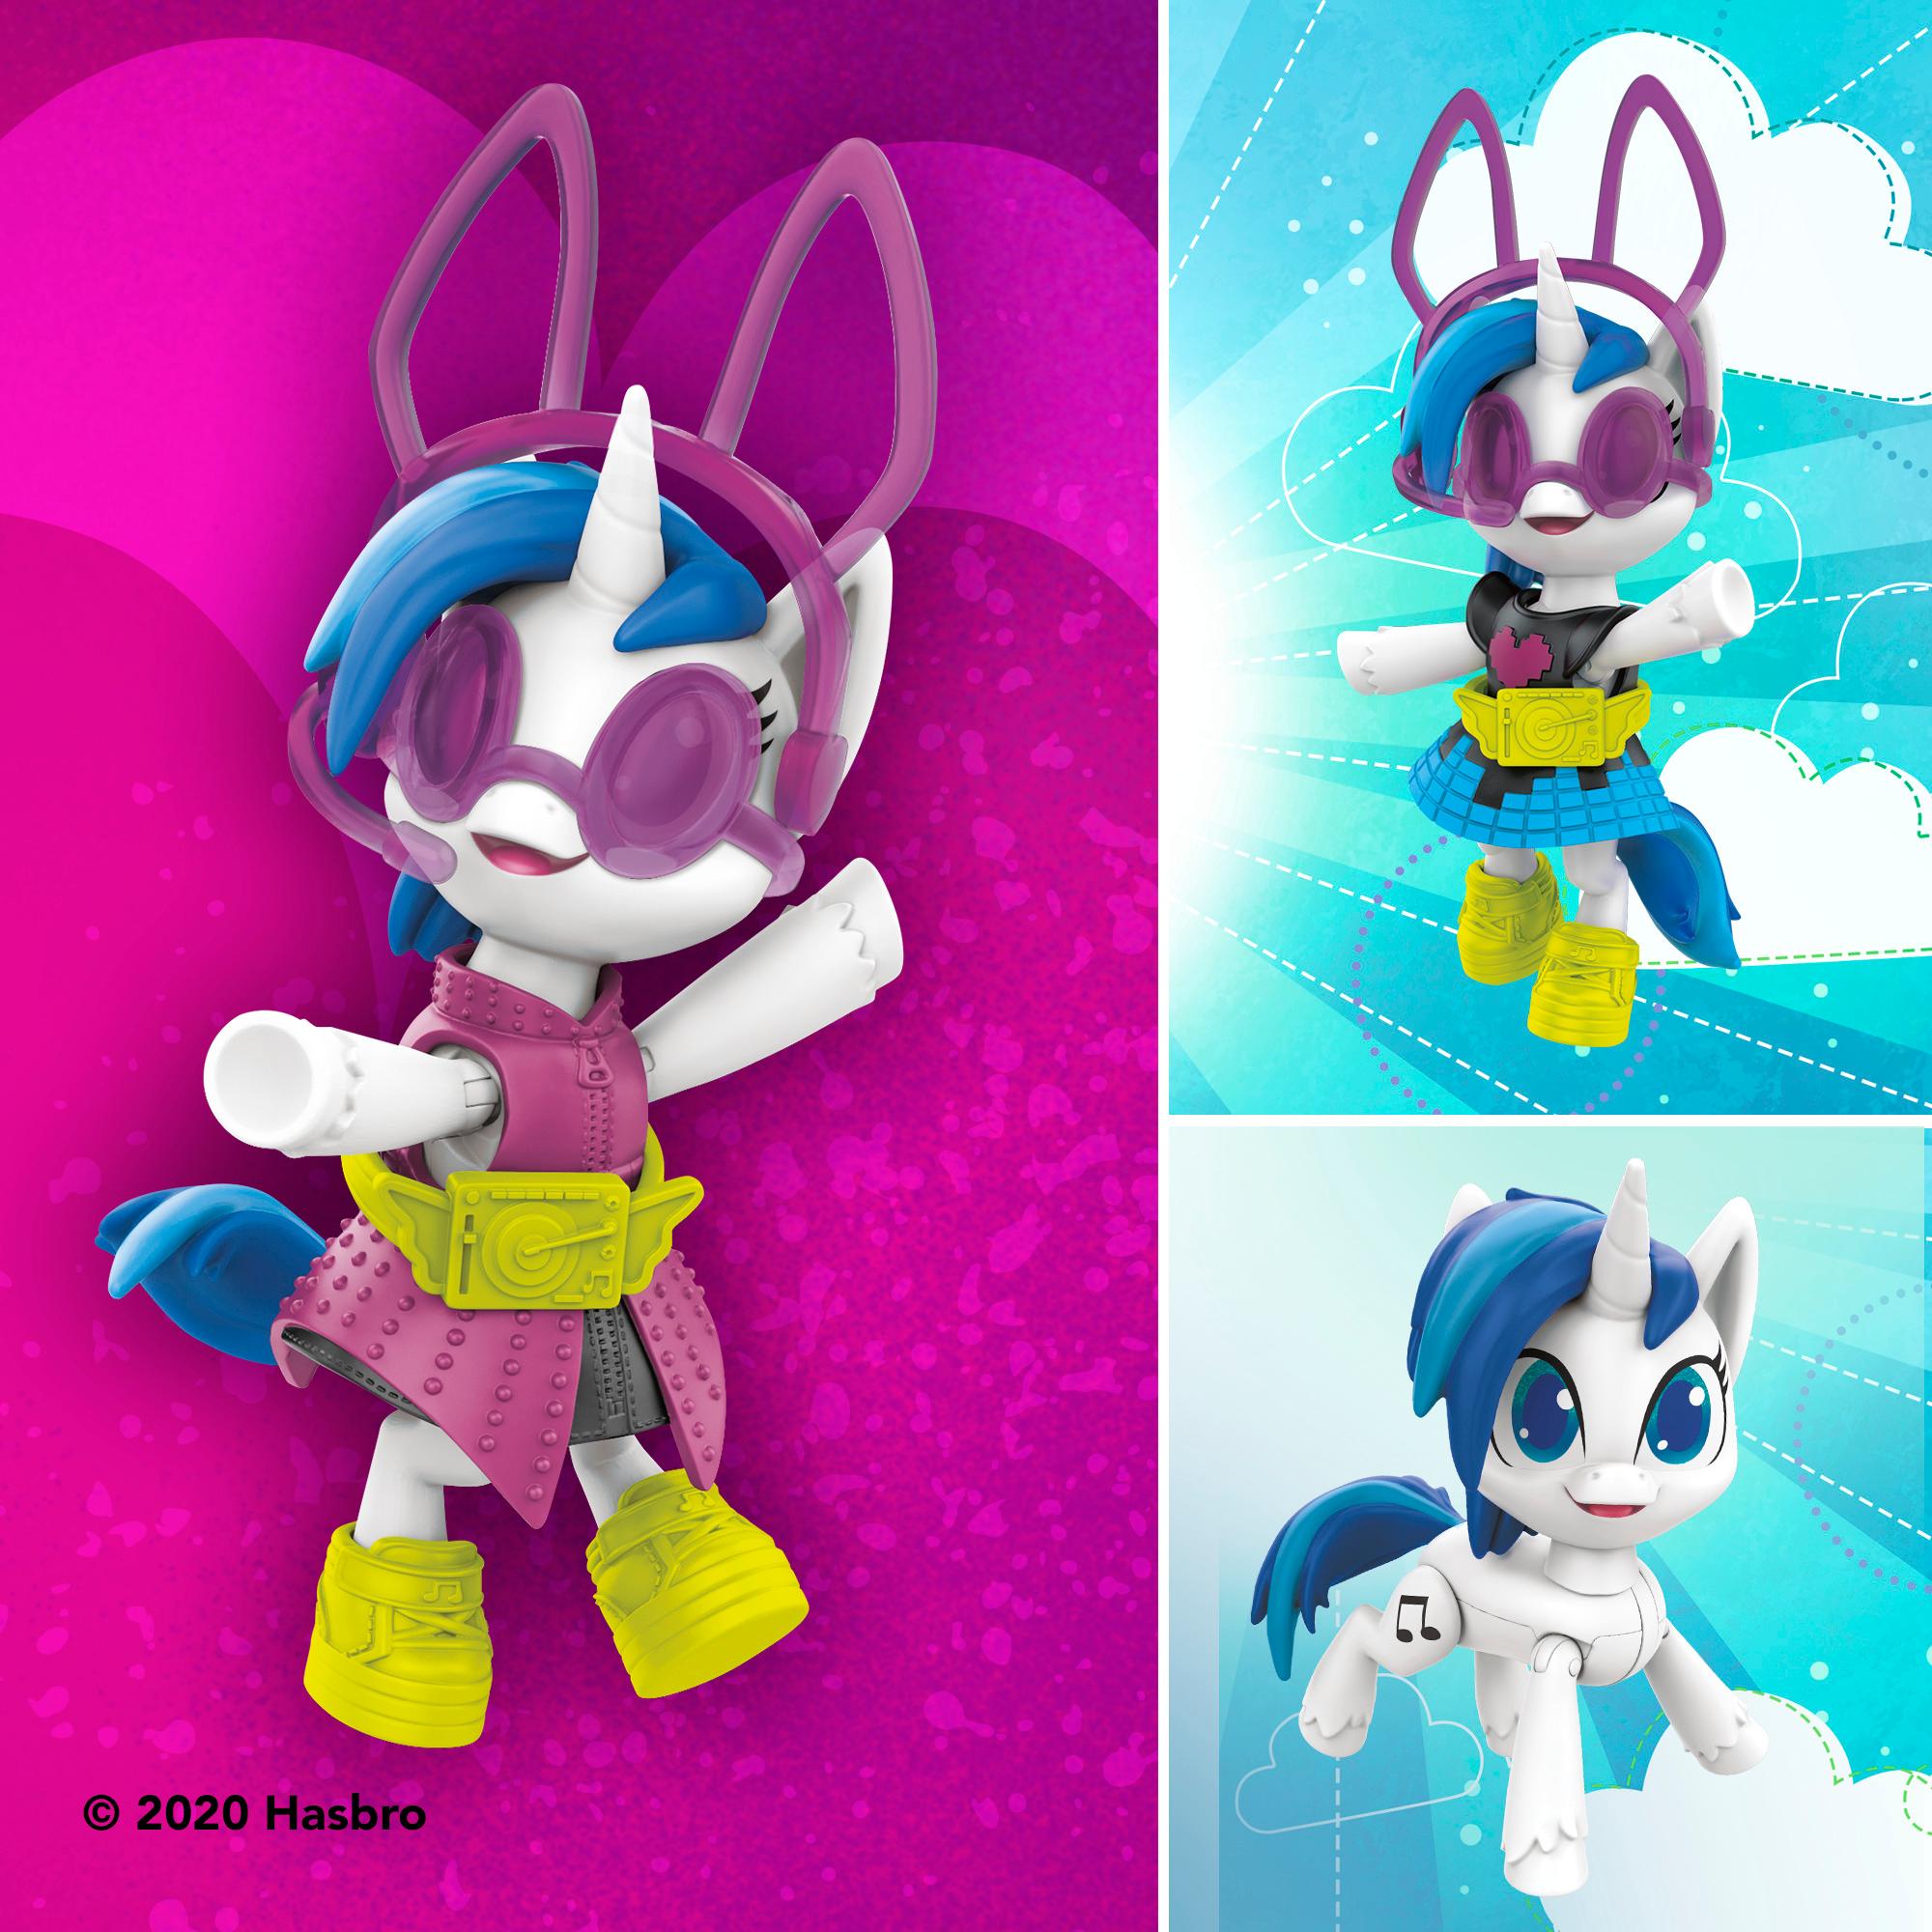 My Little Pony - Twilight Sparkle Fashion Surpresa - Hasbro